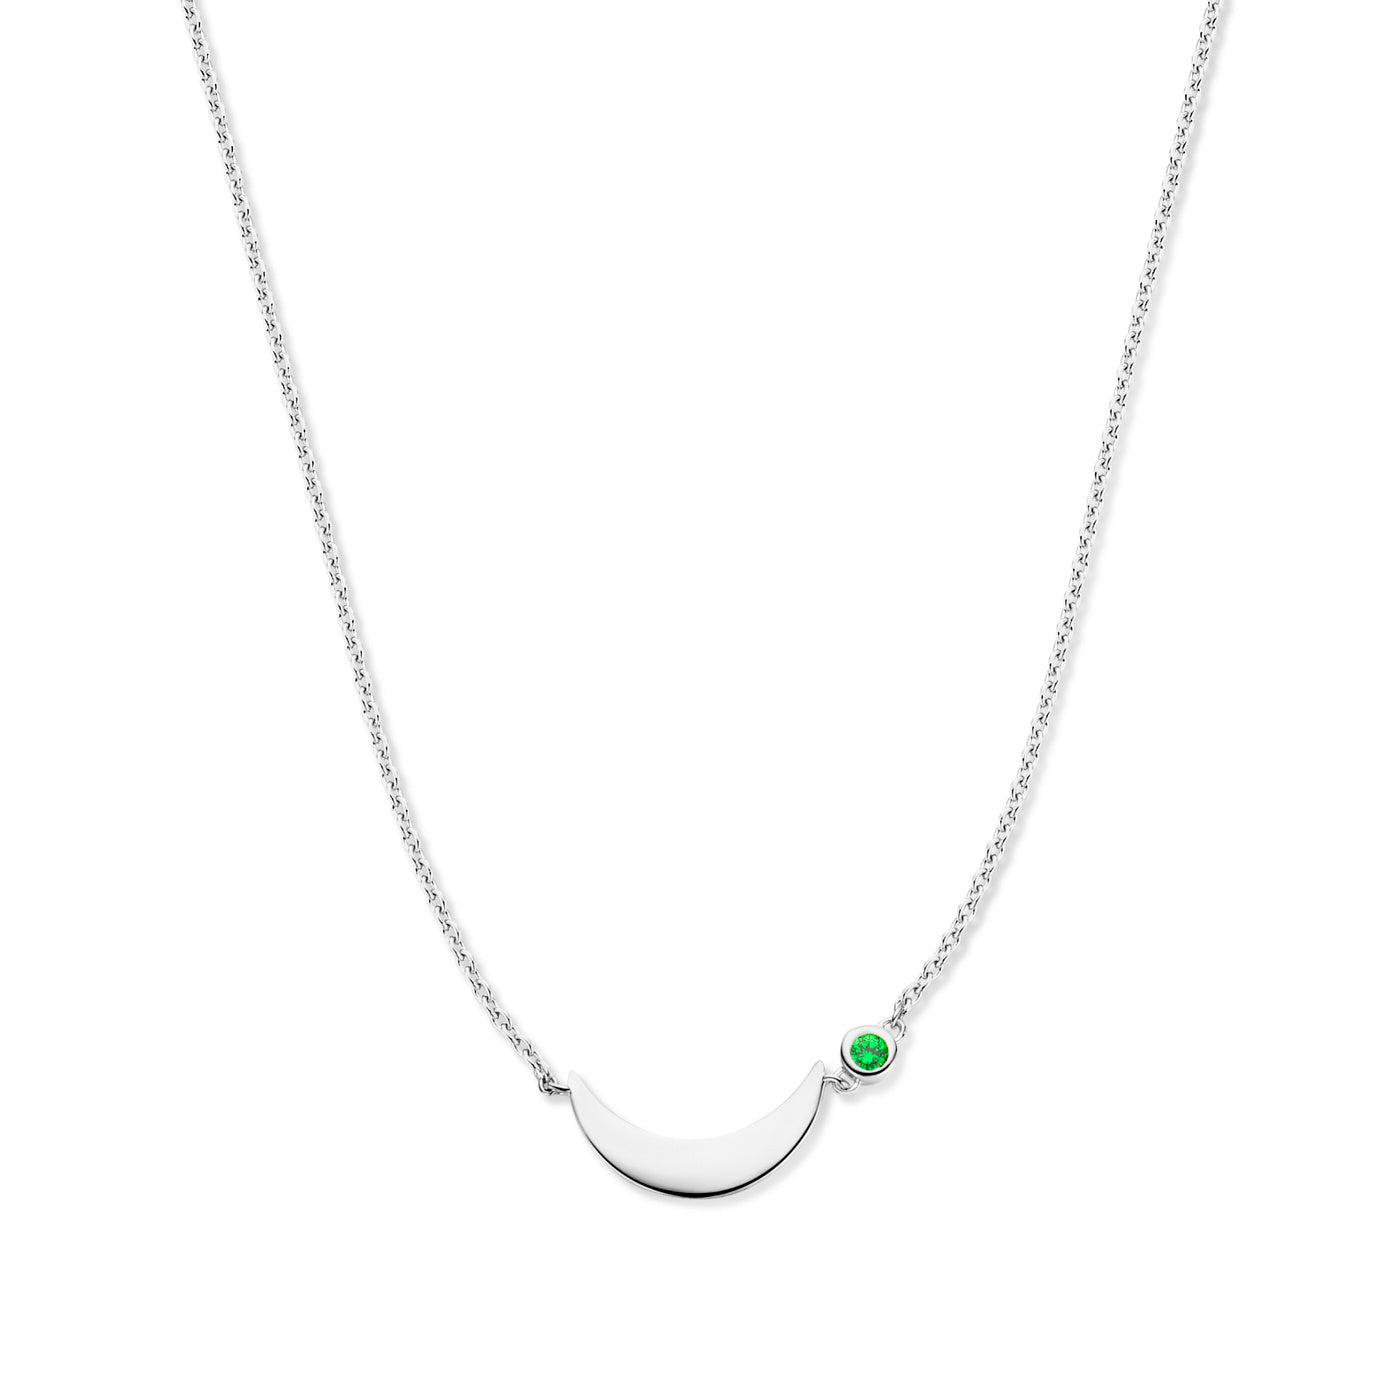 Luna 925 sterling silver halsband med grön zirkonia sten